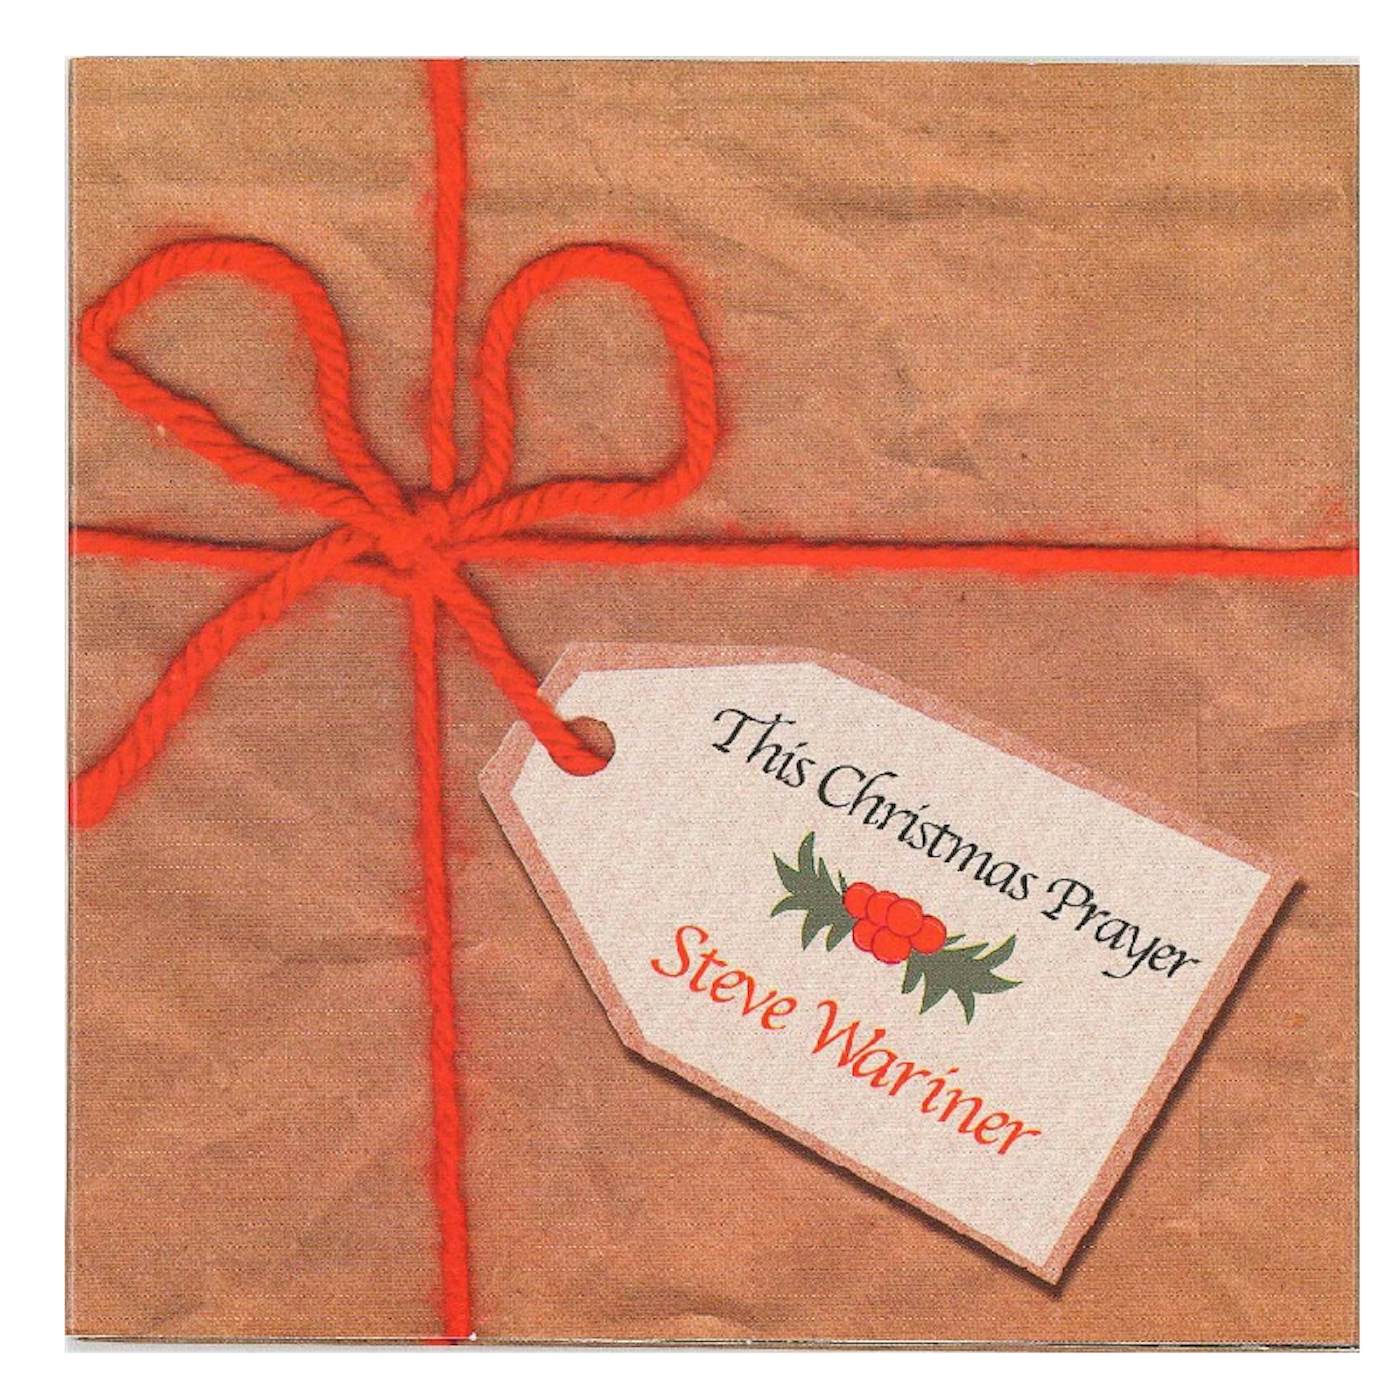 Steve Wariner Single CD- This Christmas Prayer